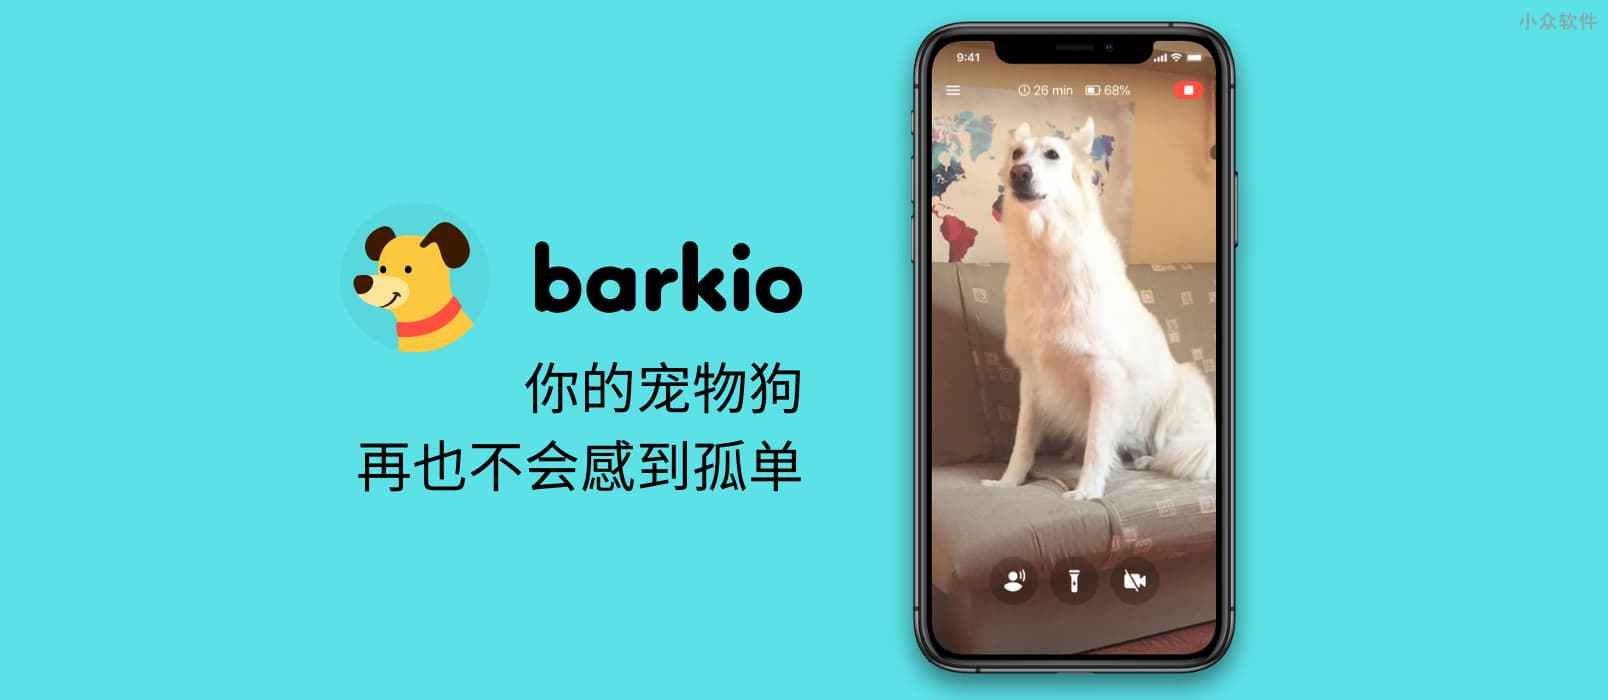 Barkio - 利用两台智能手机，远程监控家中宠物，还能和宠物打招呼 1